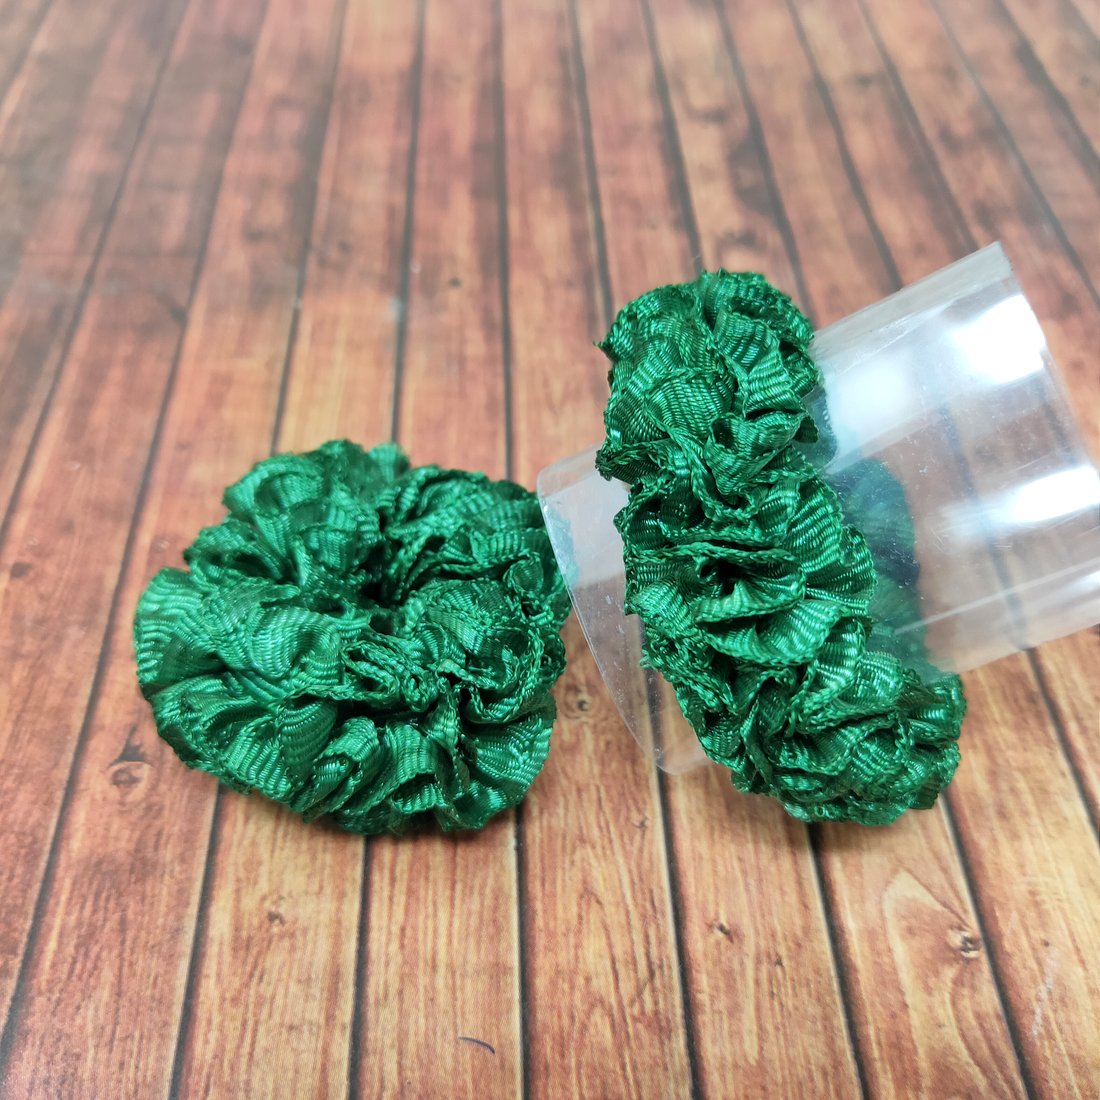 Anokhi Ada Green Fabric small Scrunchie for Girls and Women (15-17 Scrunchie, 2 Pcs)